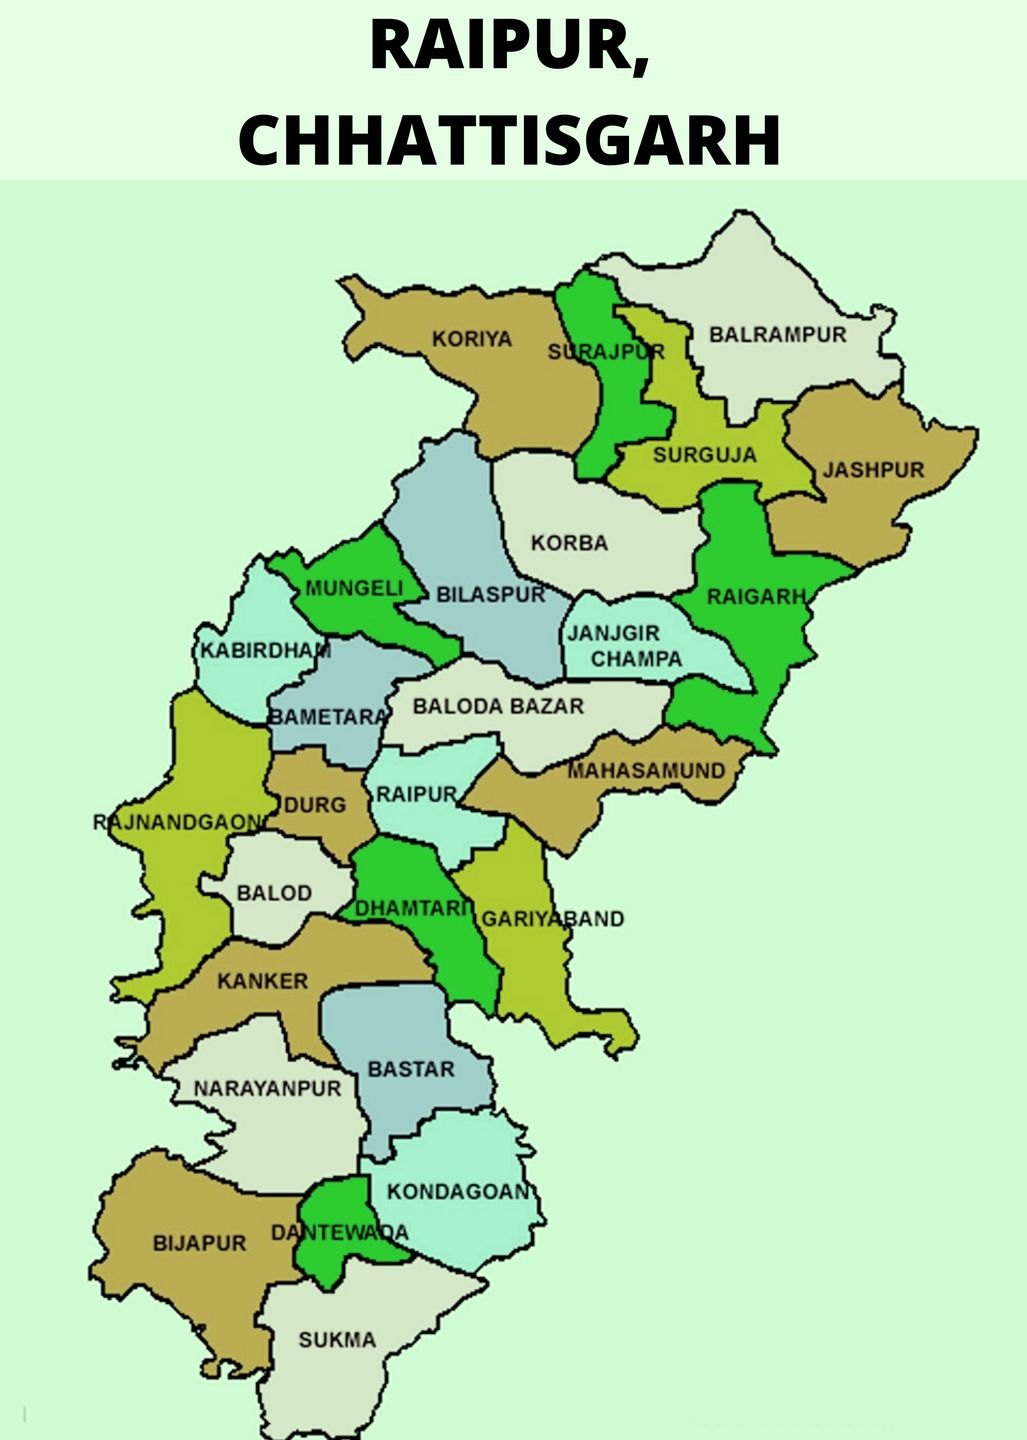 RAIPUR, CHHATTISGARH MAP